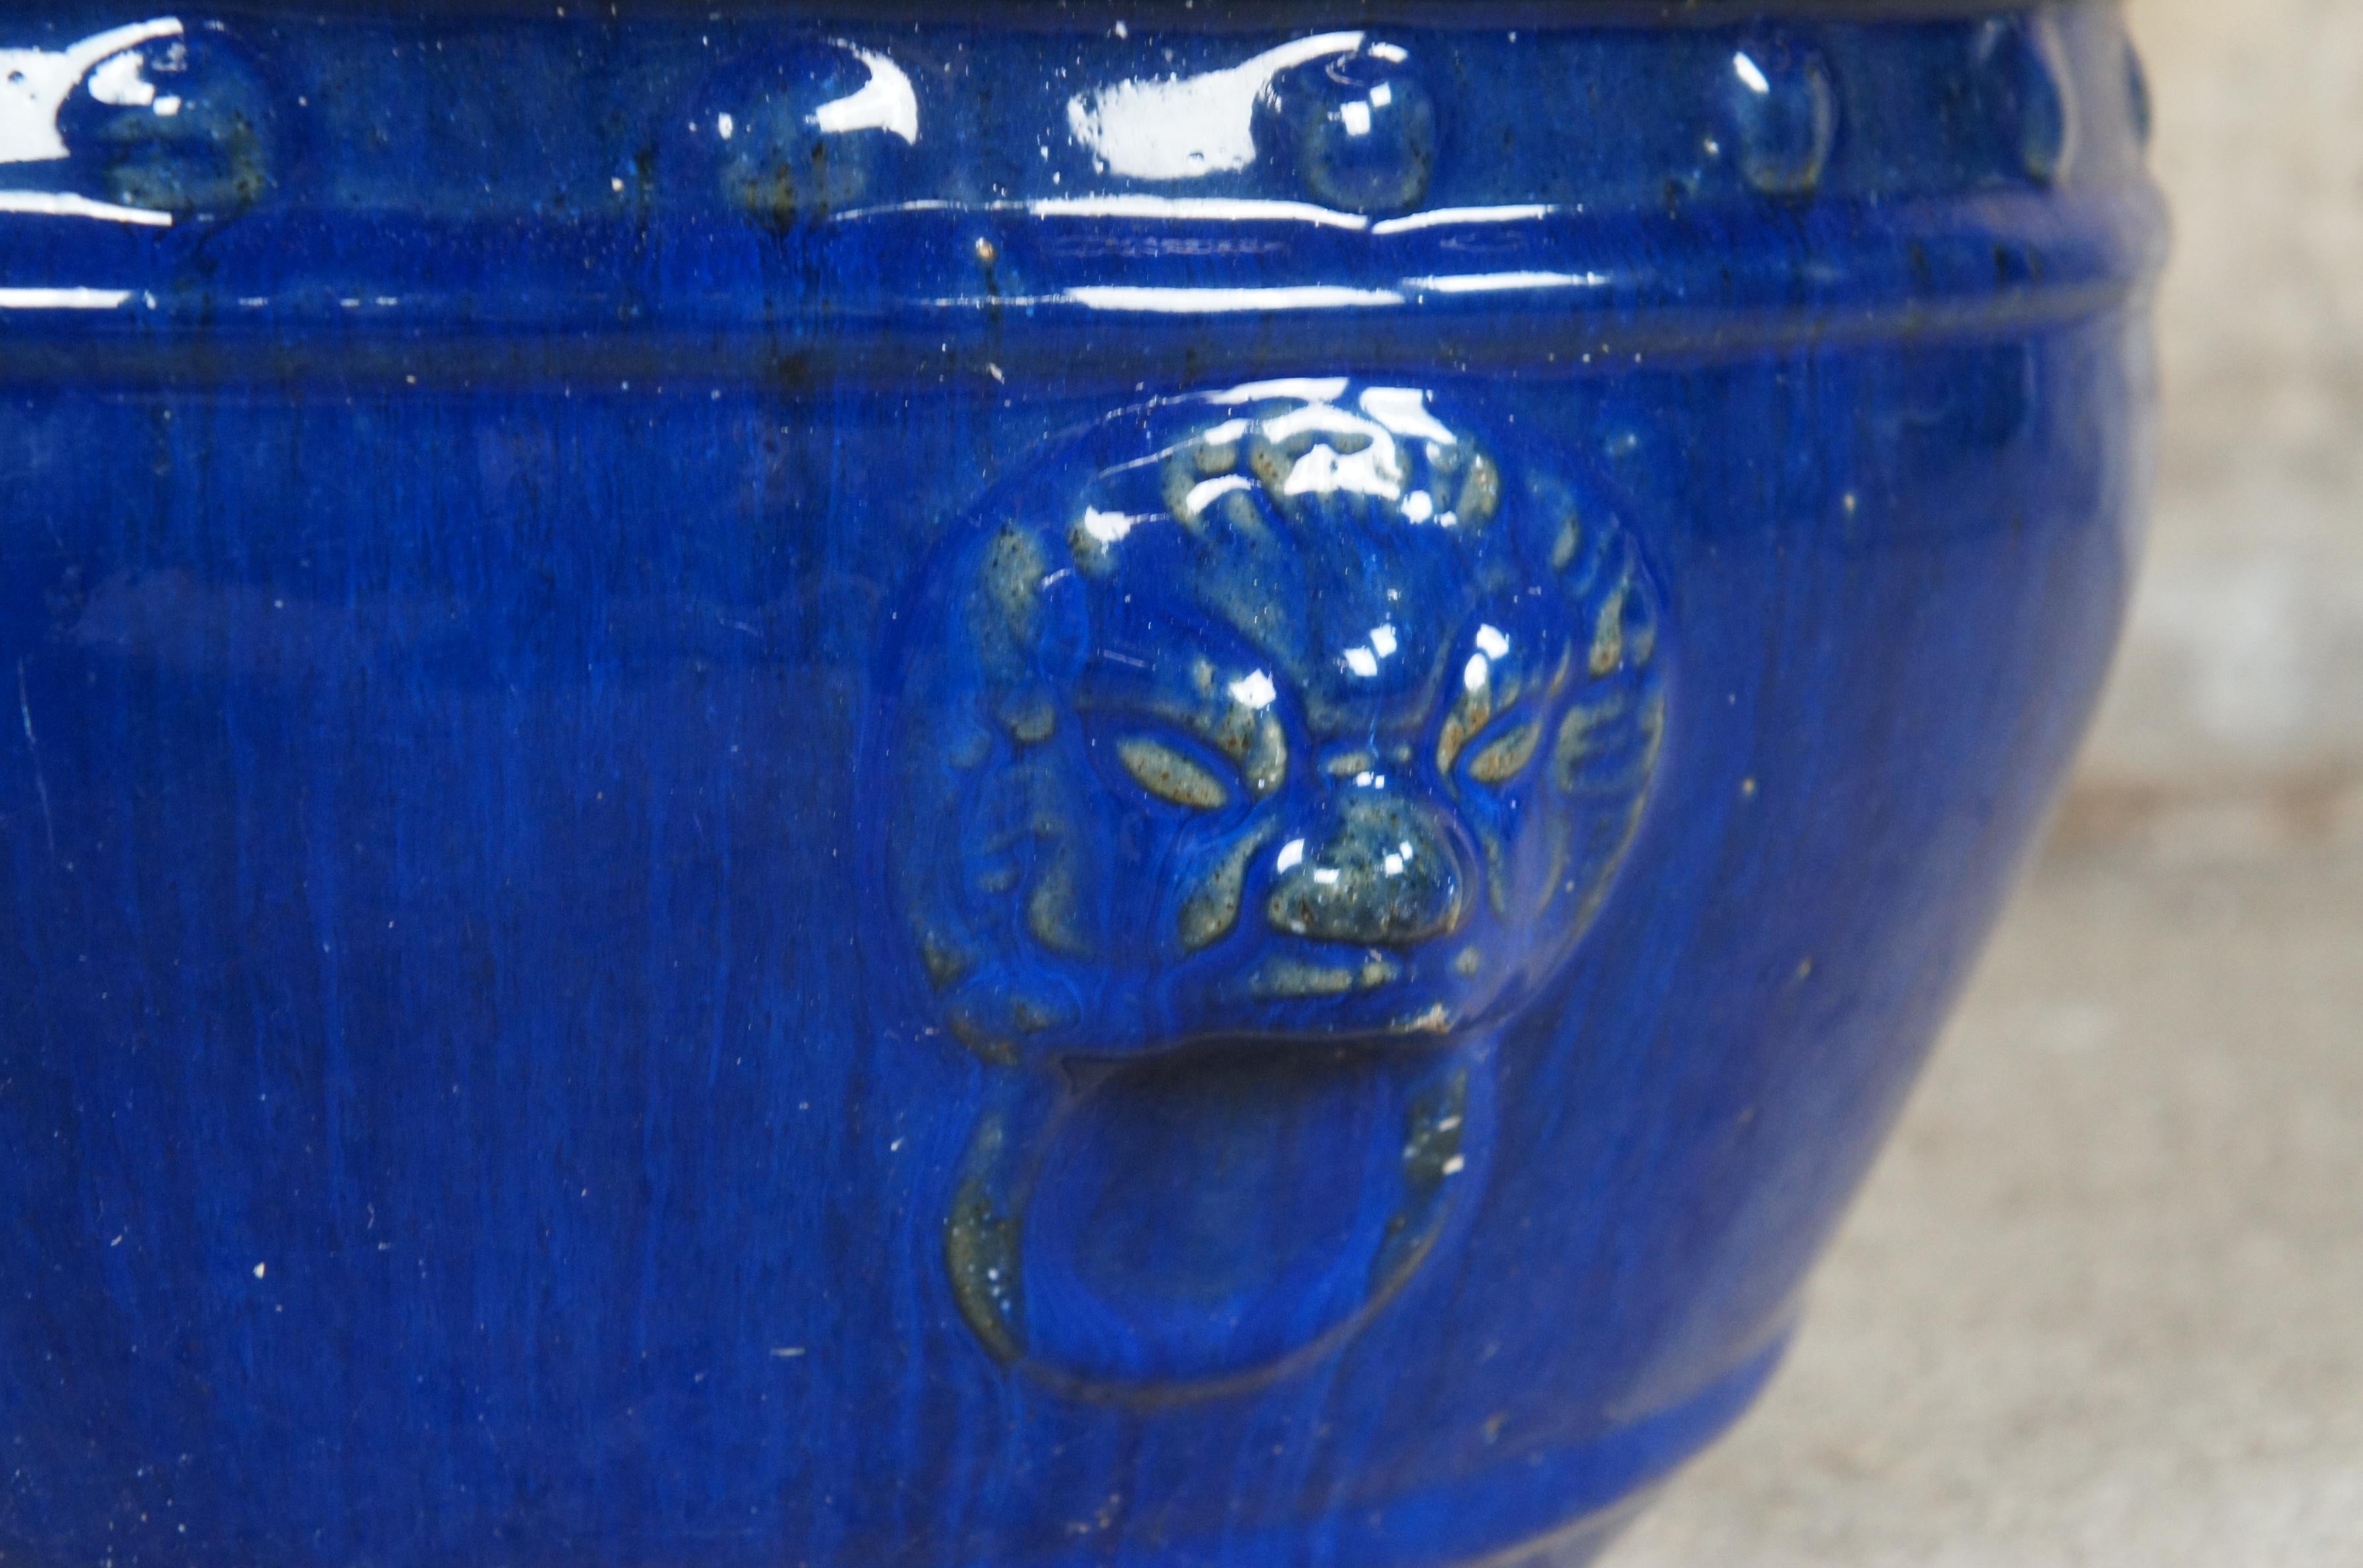 Handmade French Modern Blue Glazed Ceramic Lion Head Jardinière Planter Urns 16